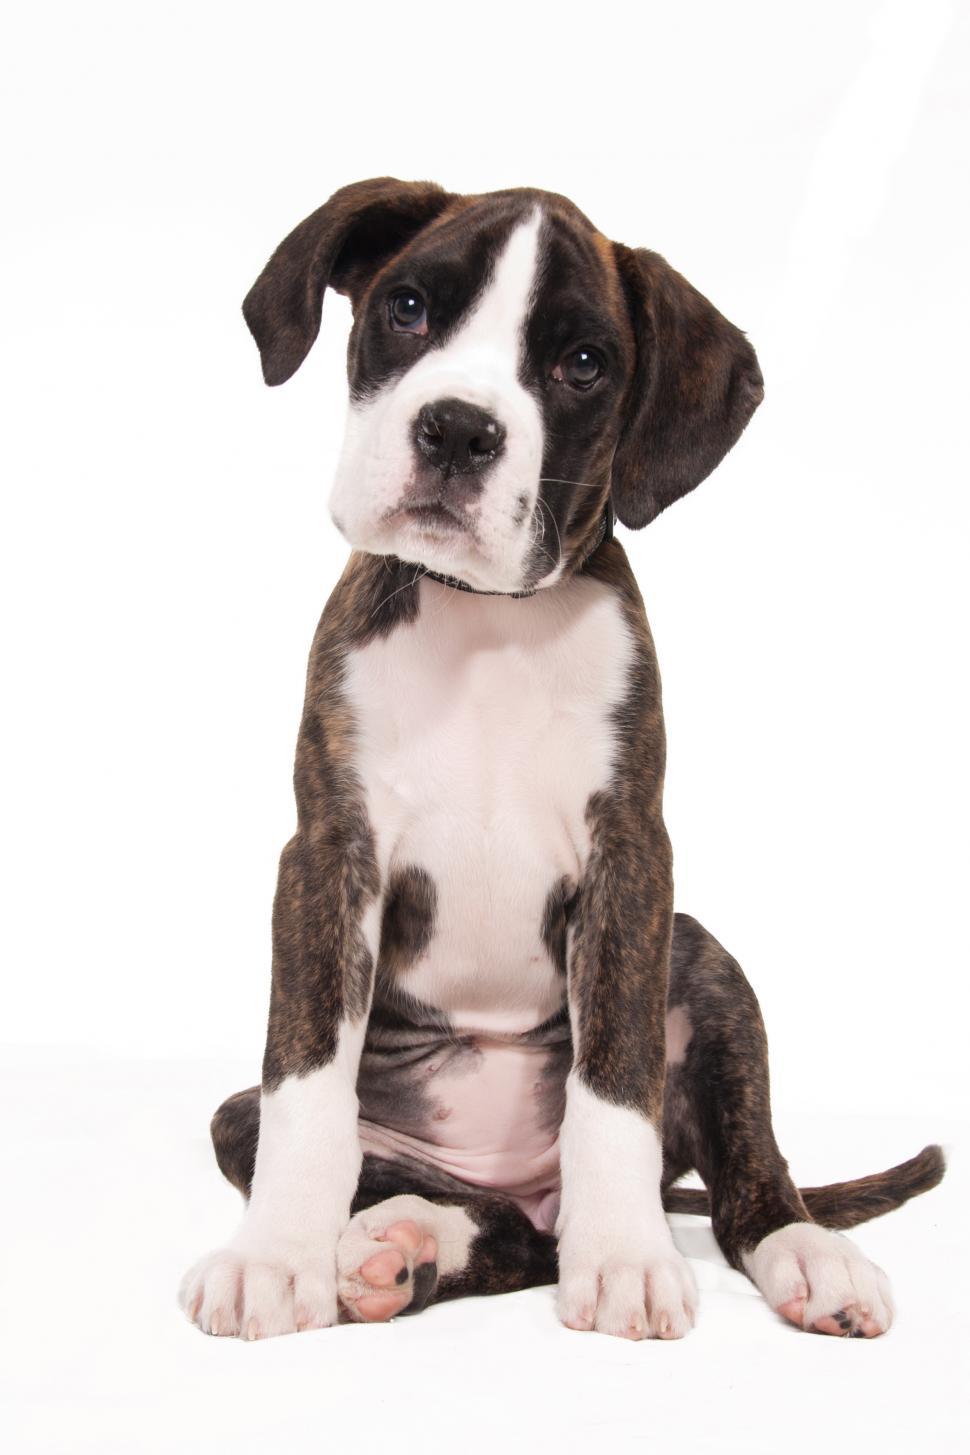 Free Image of boxer dog puppy, isolated over white background 